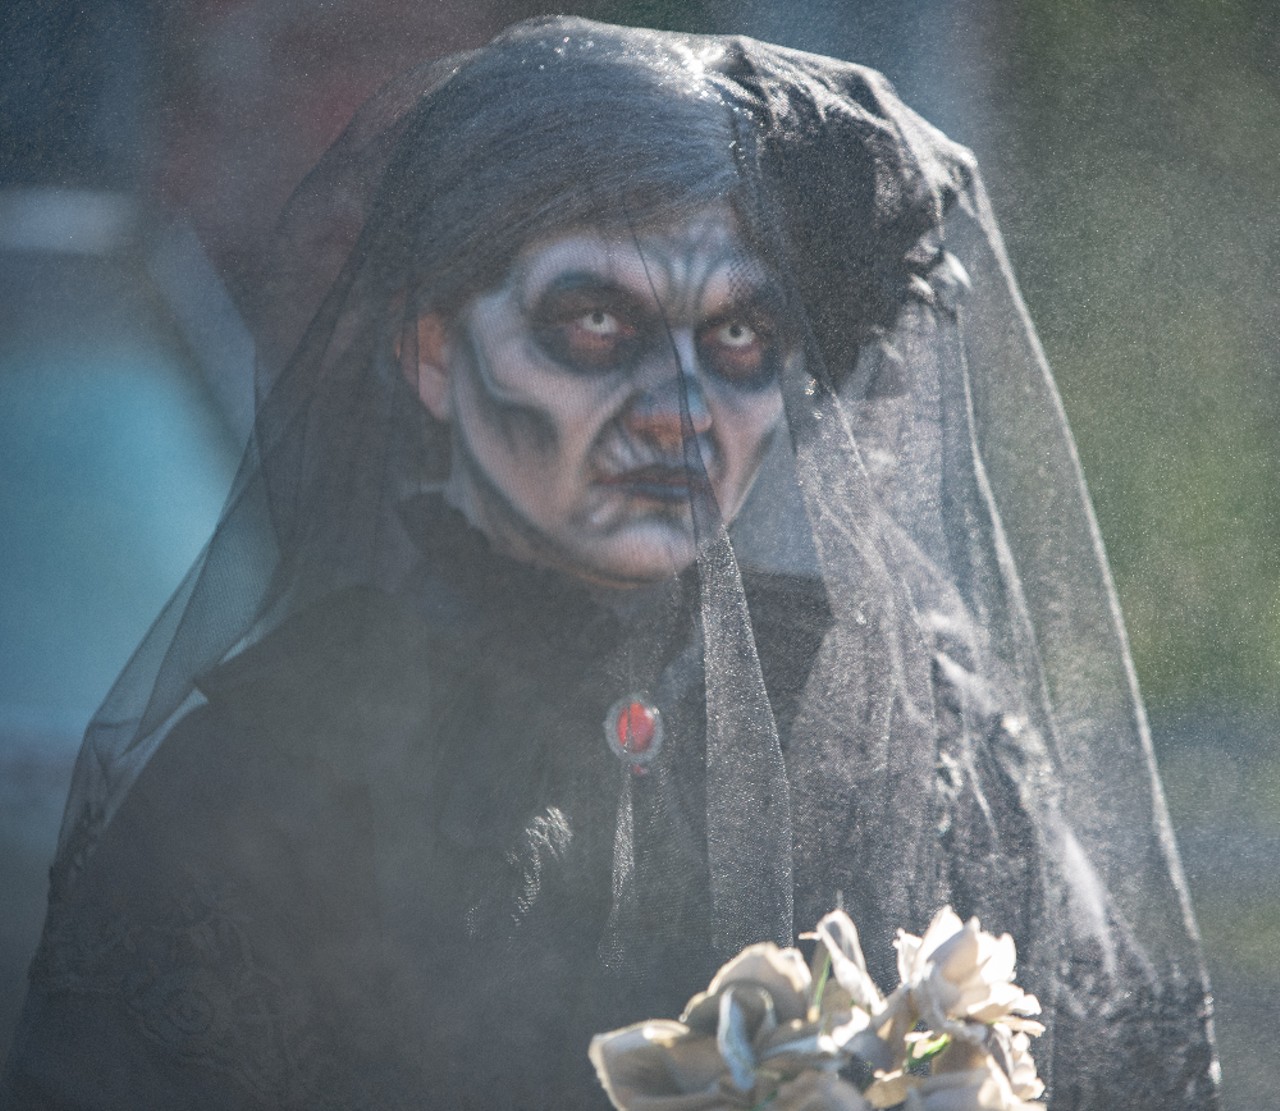 Gatorland's 'Gators, Ghosts & Goblins' brings Halloween to the best Orlando attraction